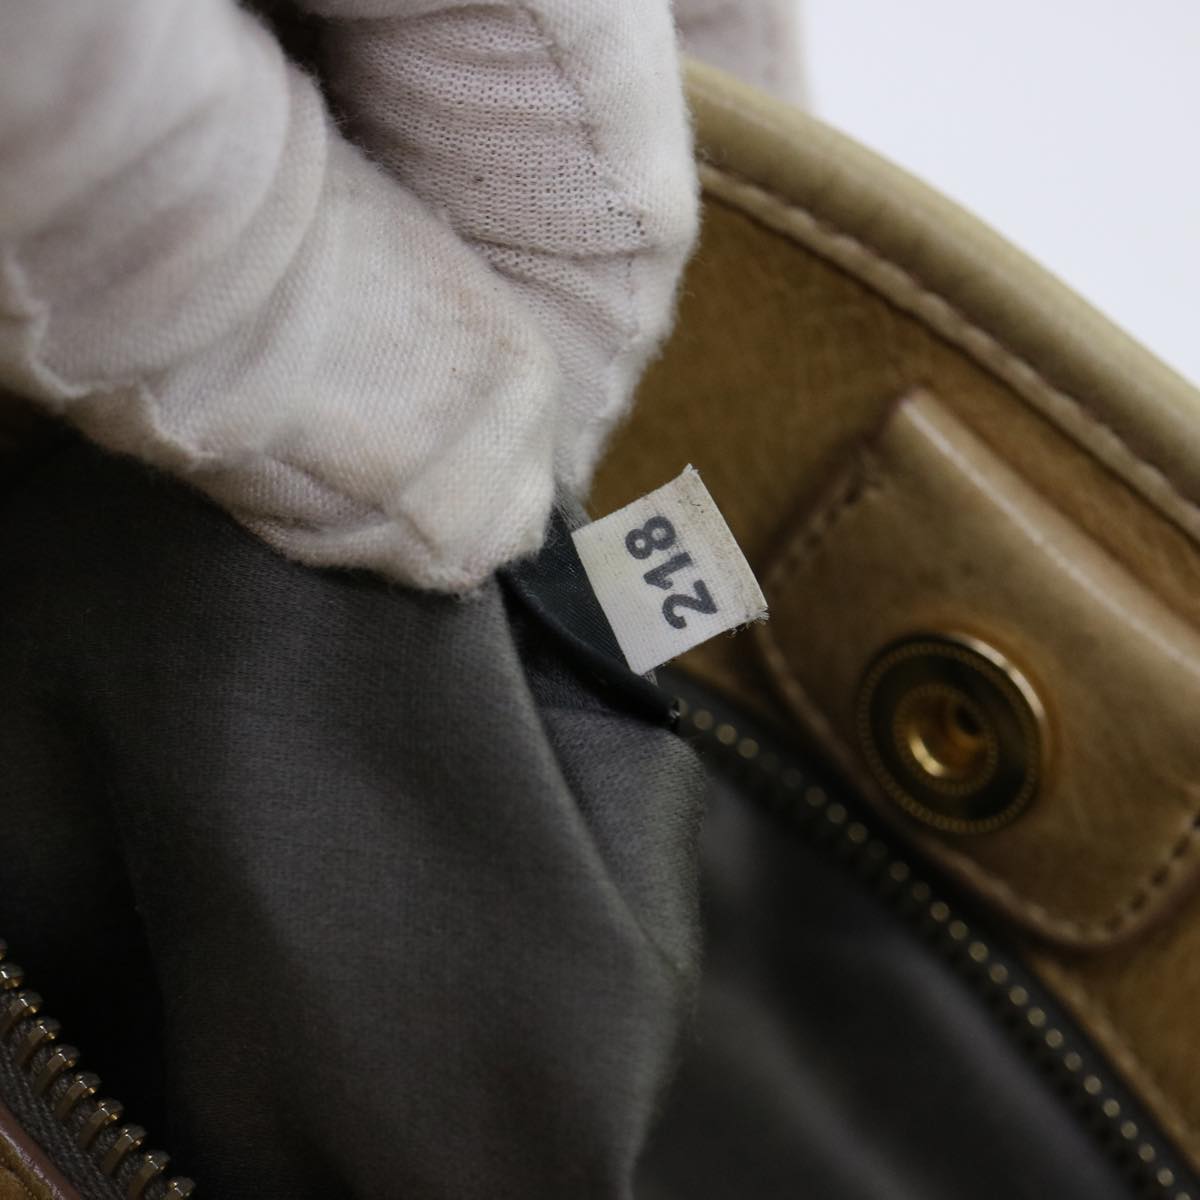 Miu Miu Hand Bag Leather 2way Beige Auth bs13219